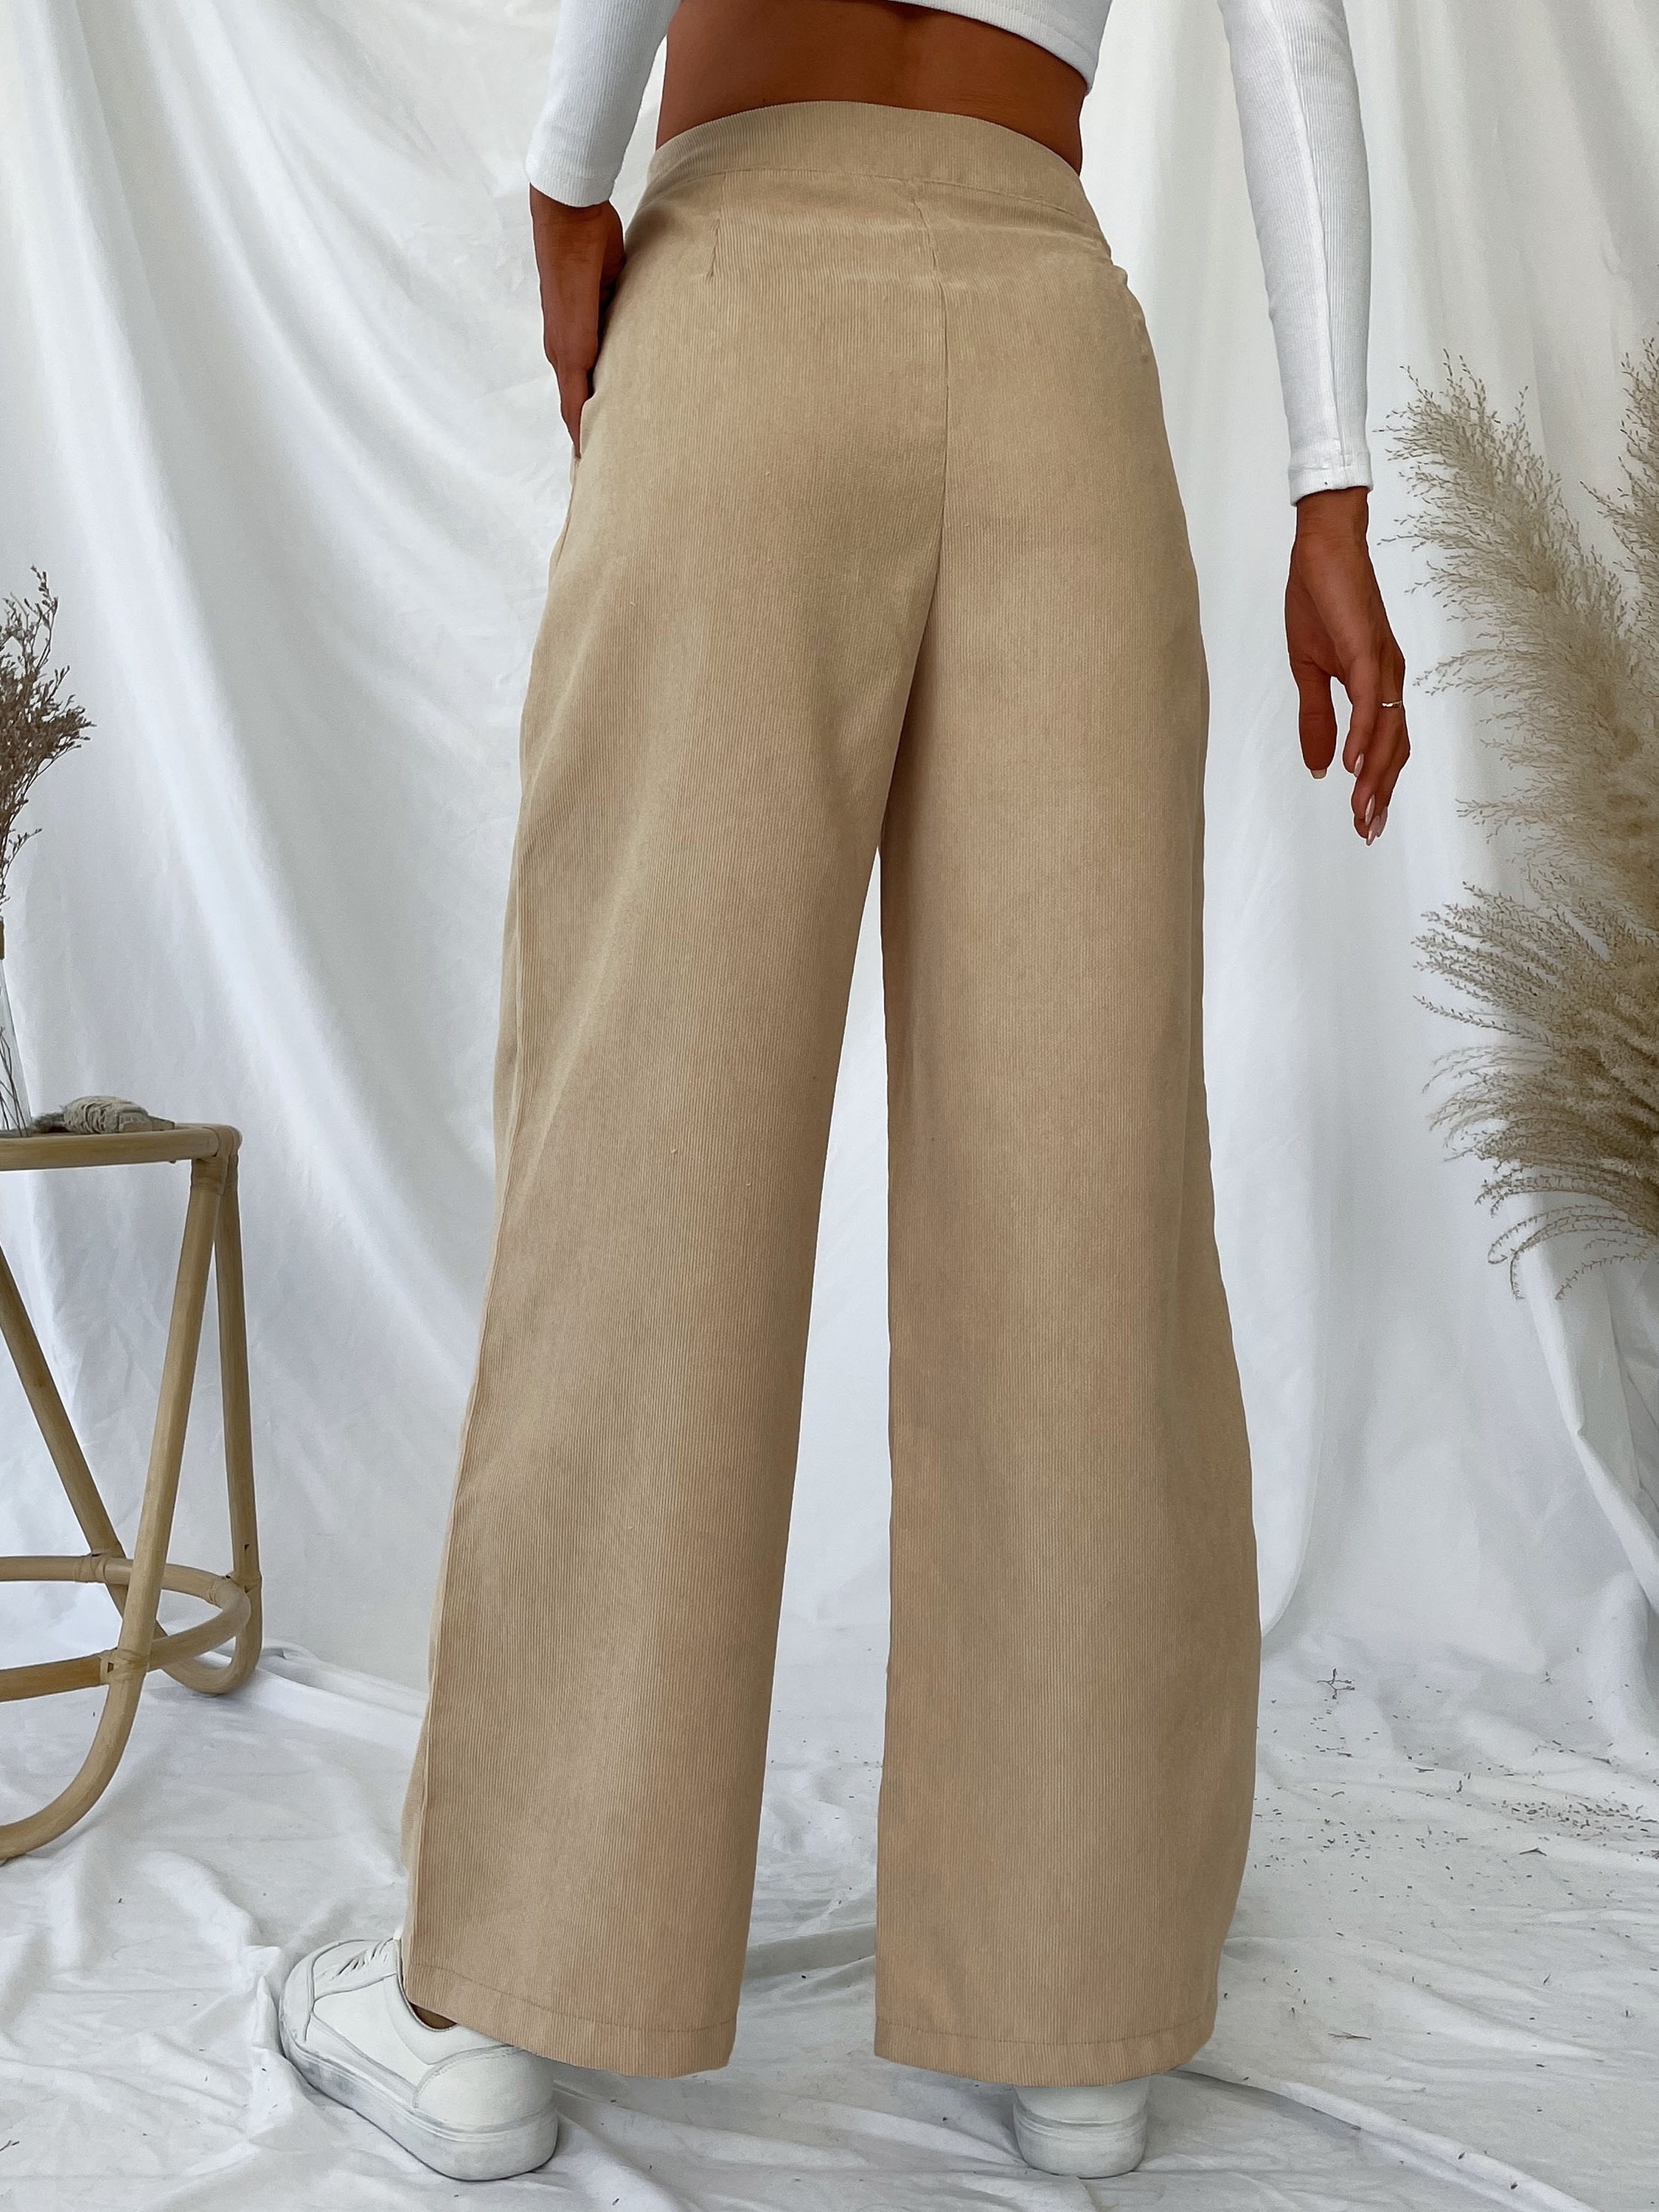 SHEIN High Waist Solid Corduroy Pants  Leg pants outfit, High waisted  pants outfit, Winter pants outfit